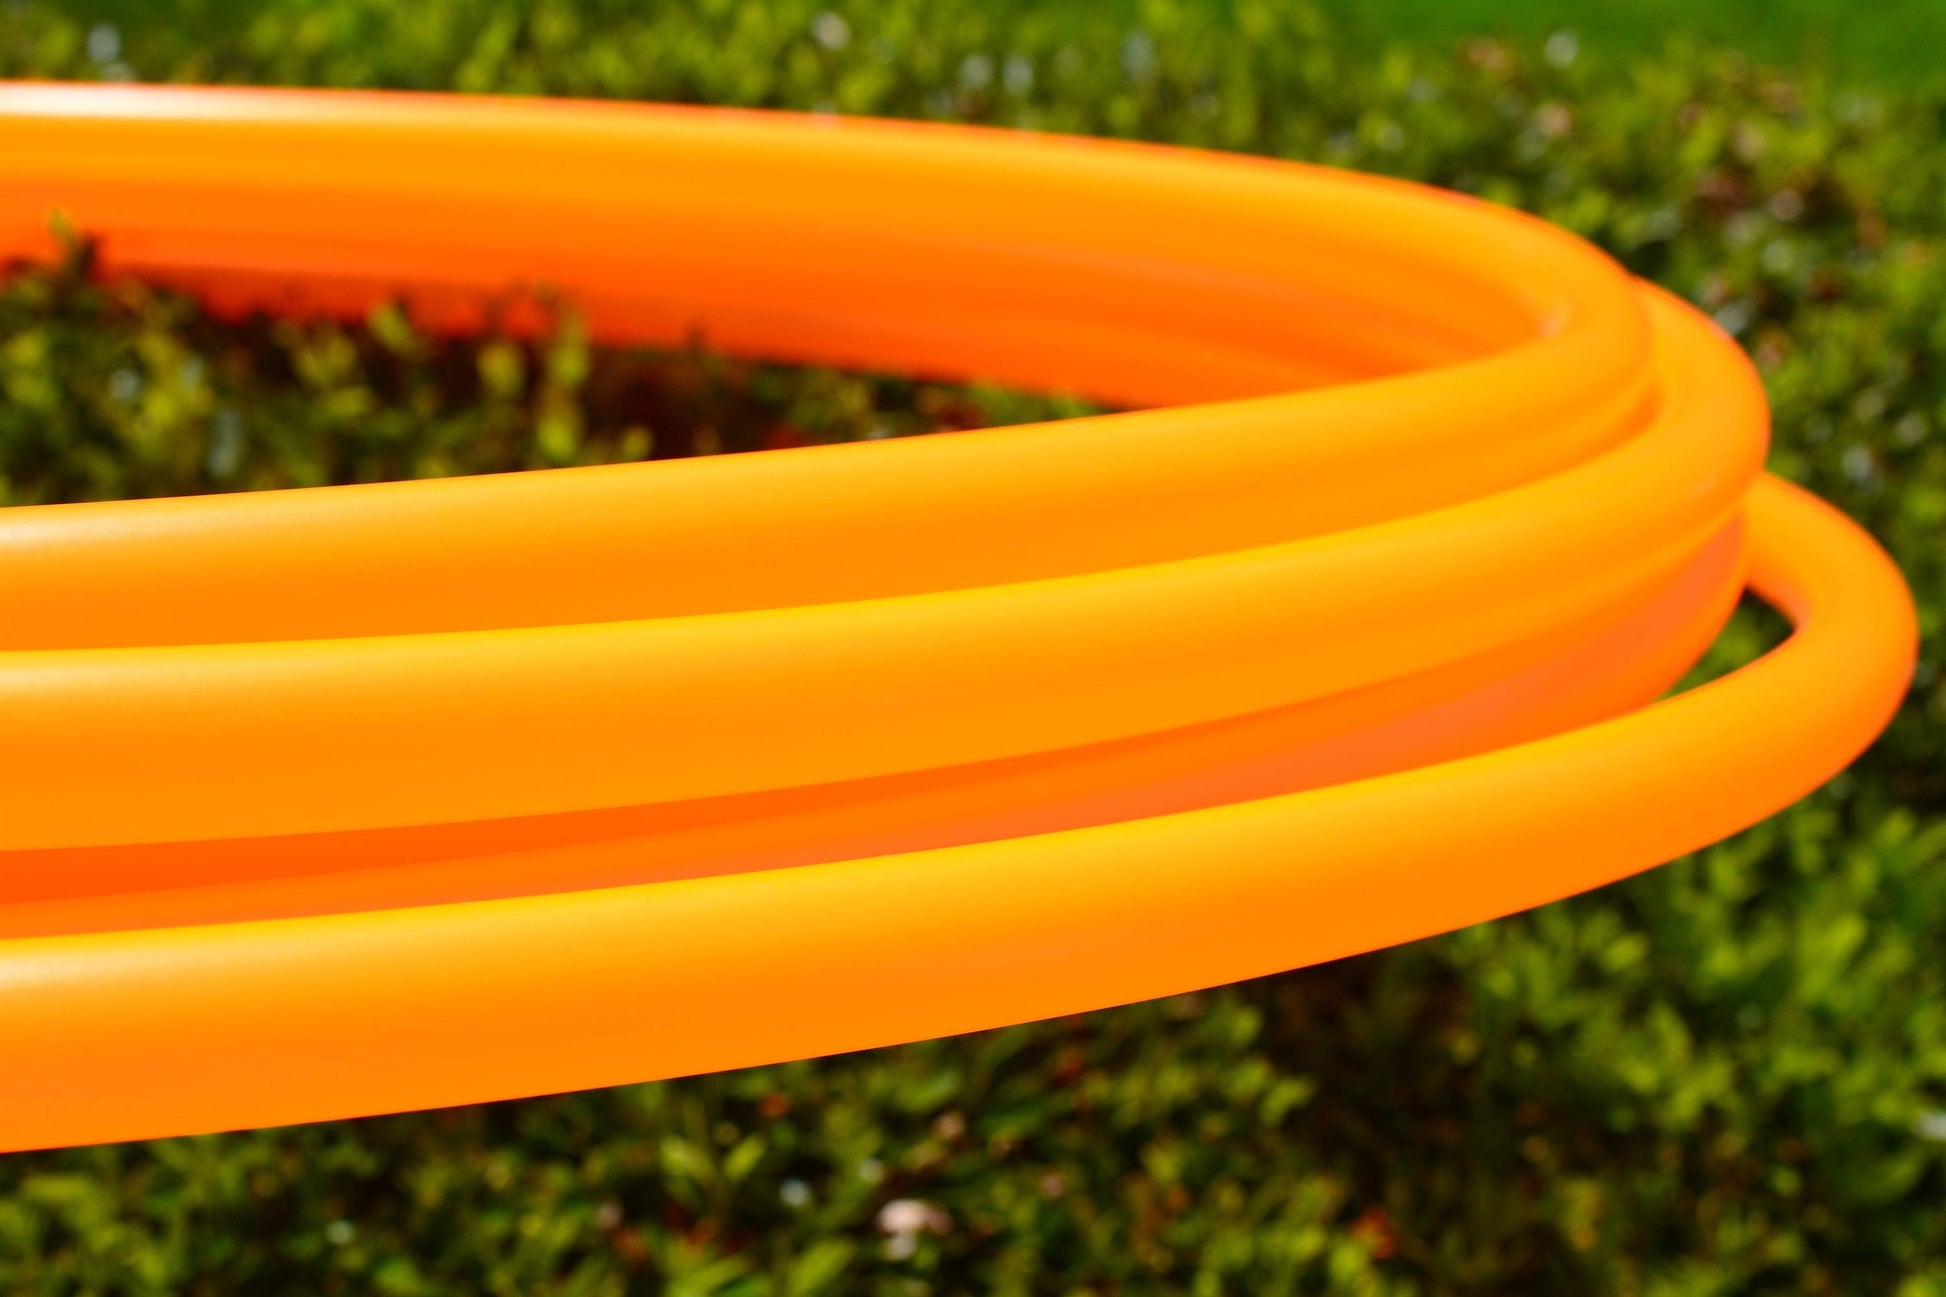 3/4 UV Orange Colored Polypro Hoops